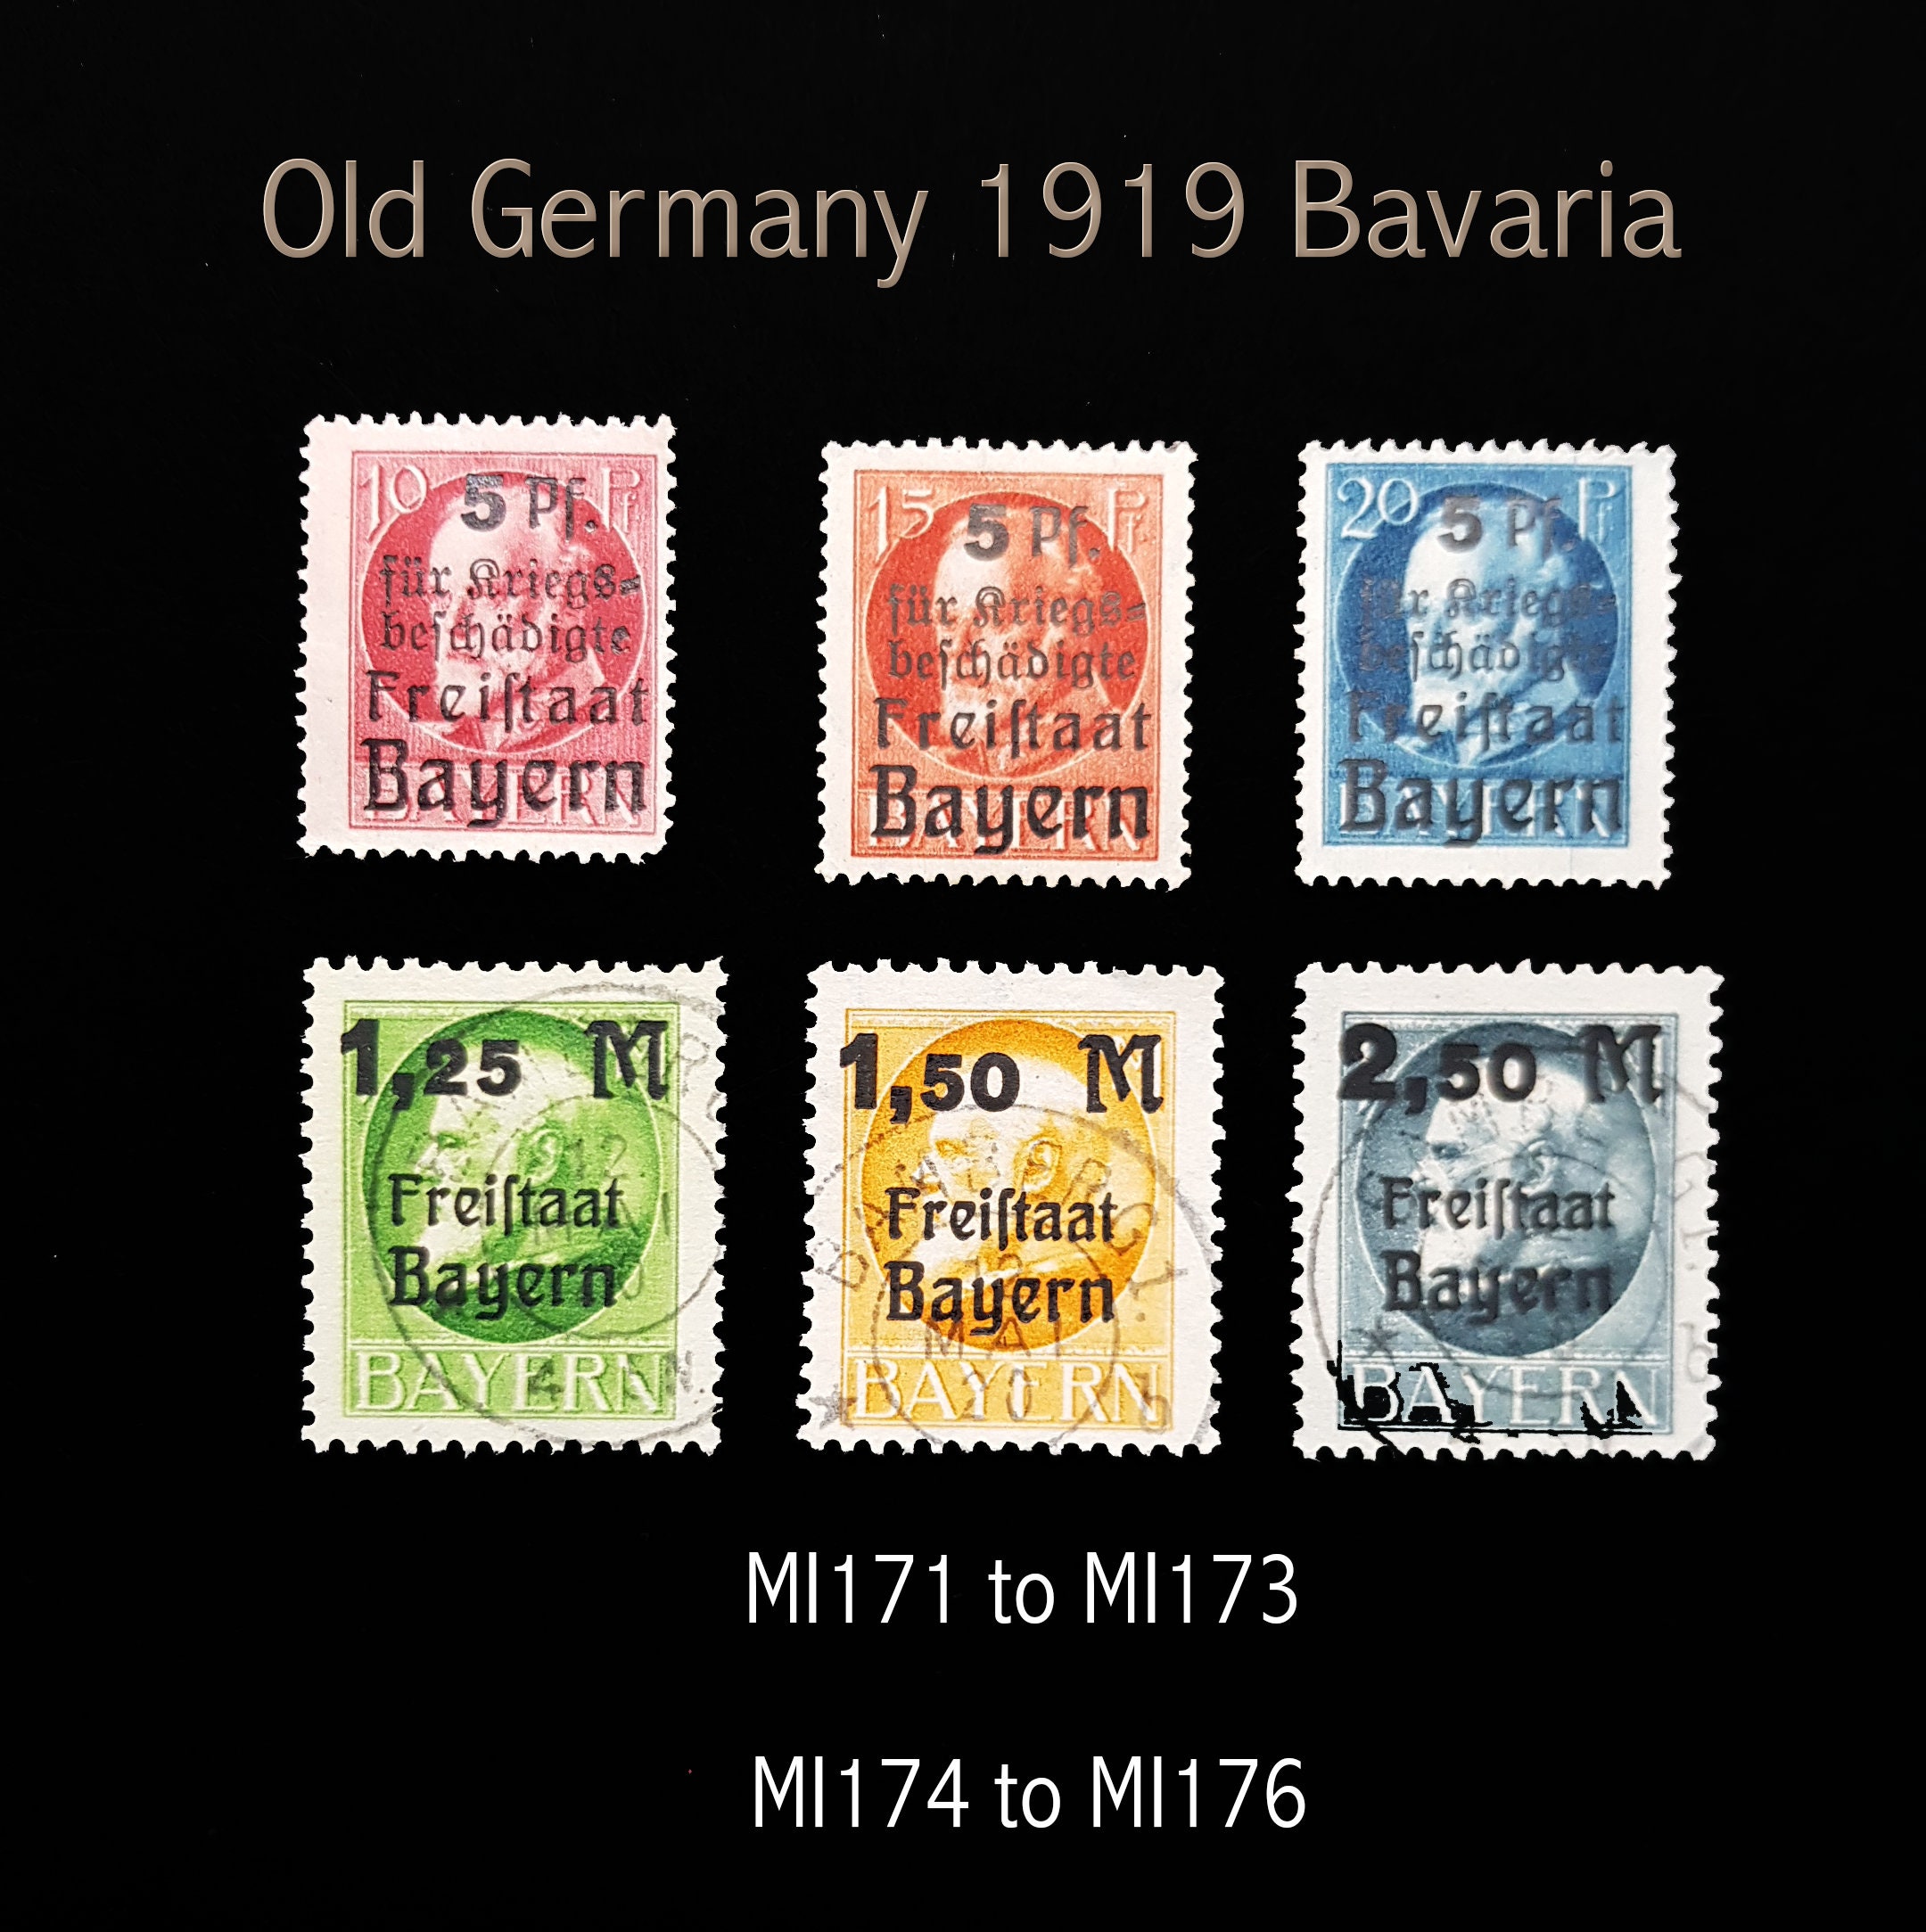 Antique Stamp Moistener, Antique German Stamp Moistener Roller